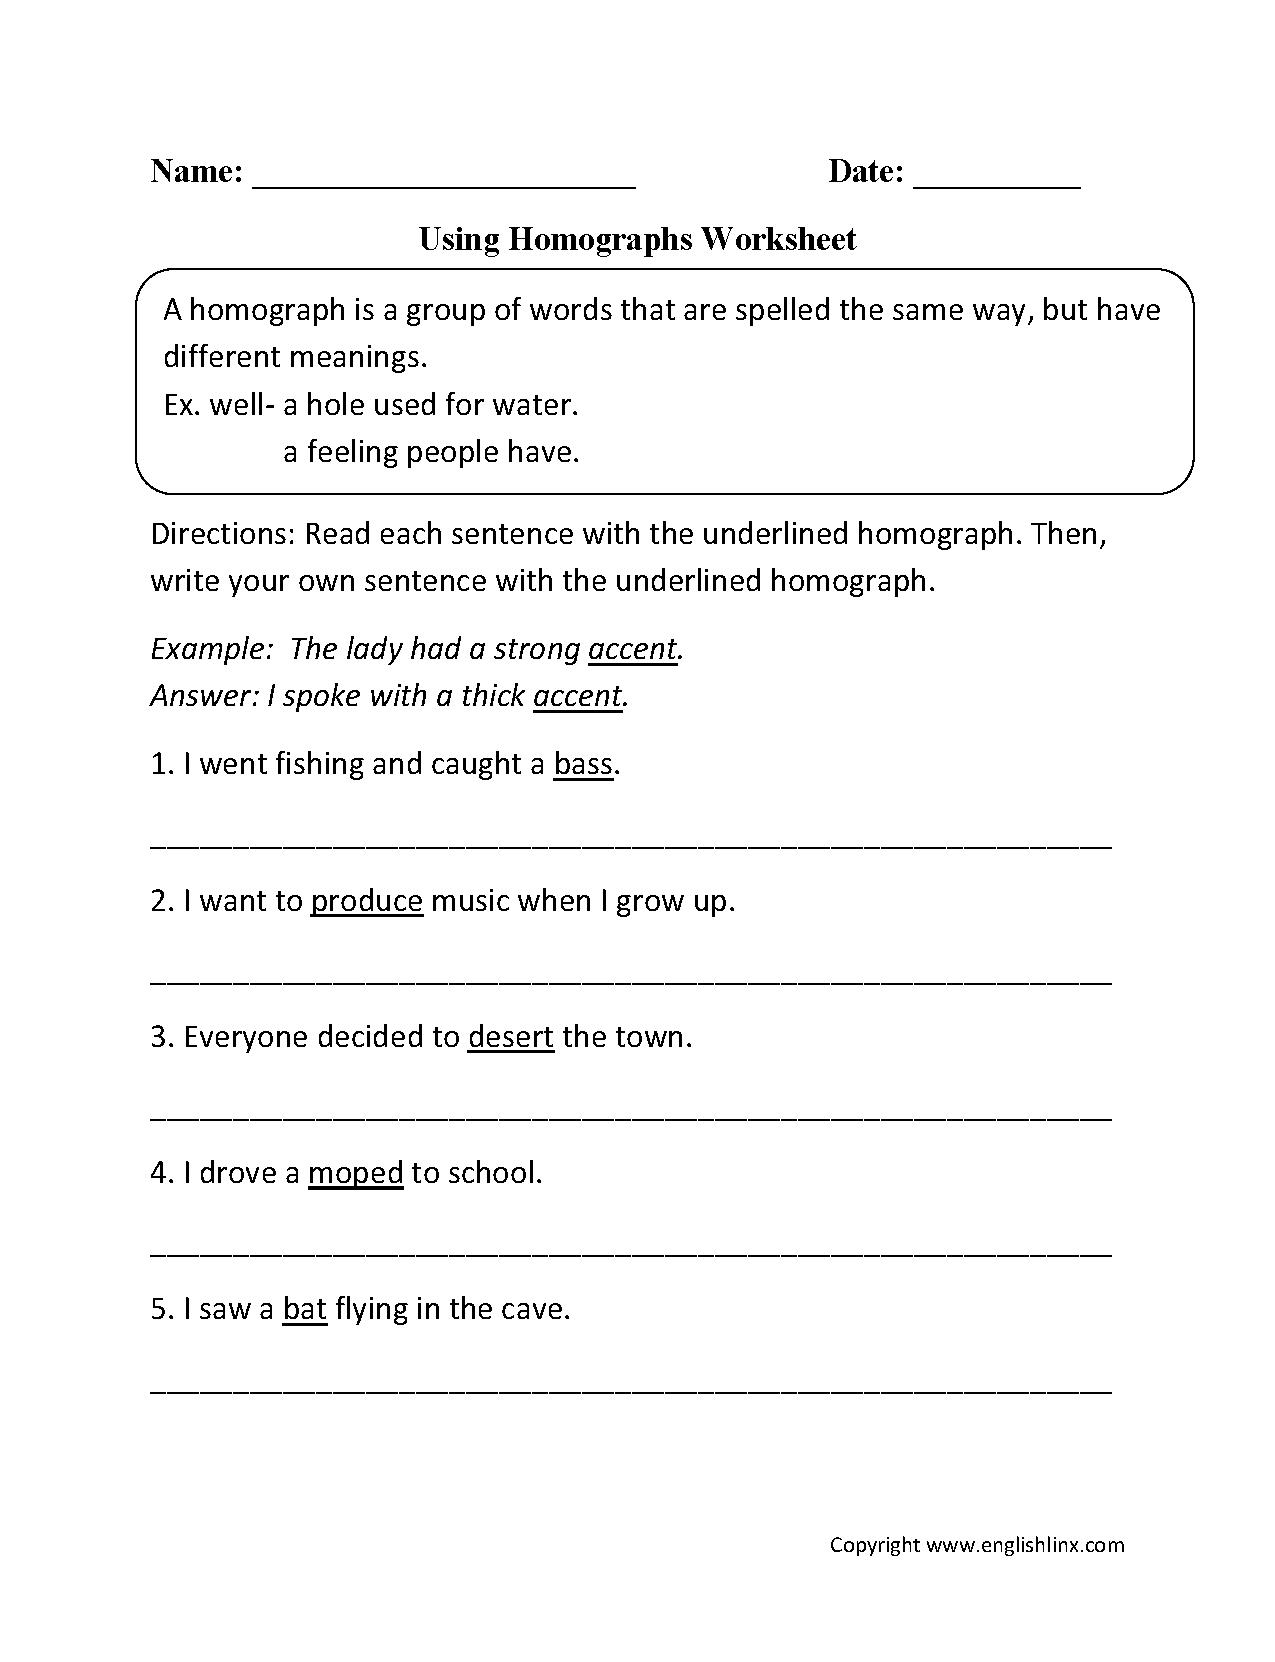 Vocabulary Worksheets | Homograph Worksheets - Printable Homograph Puzzles